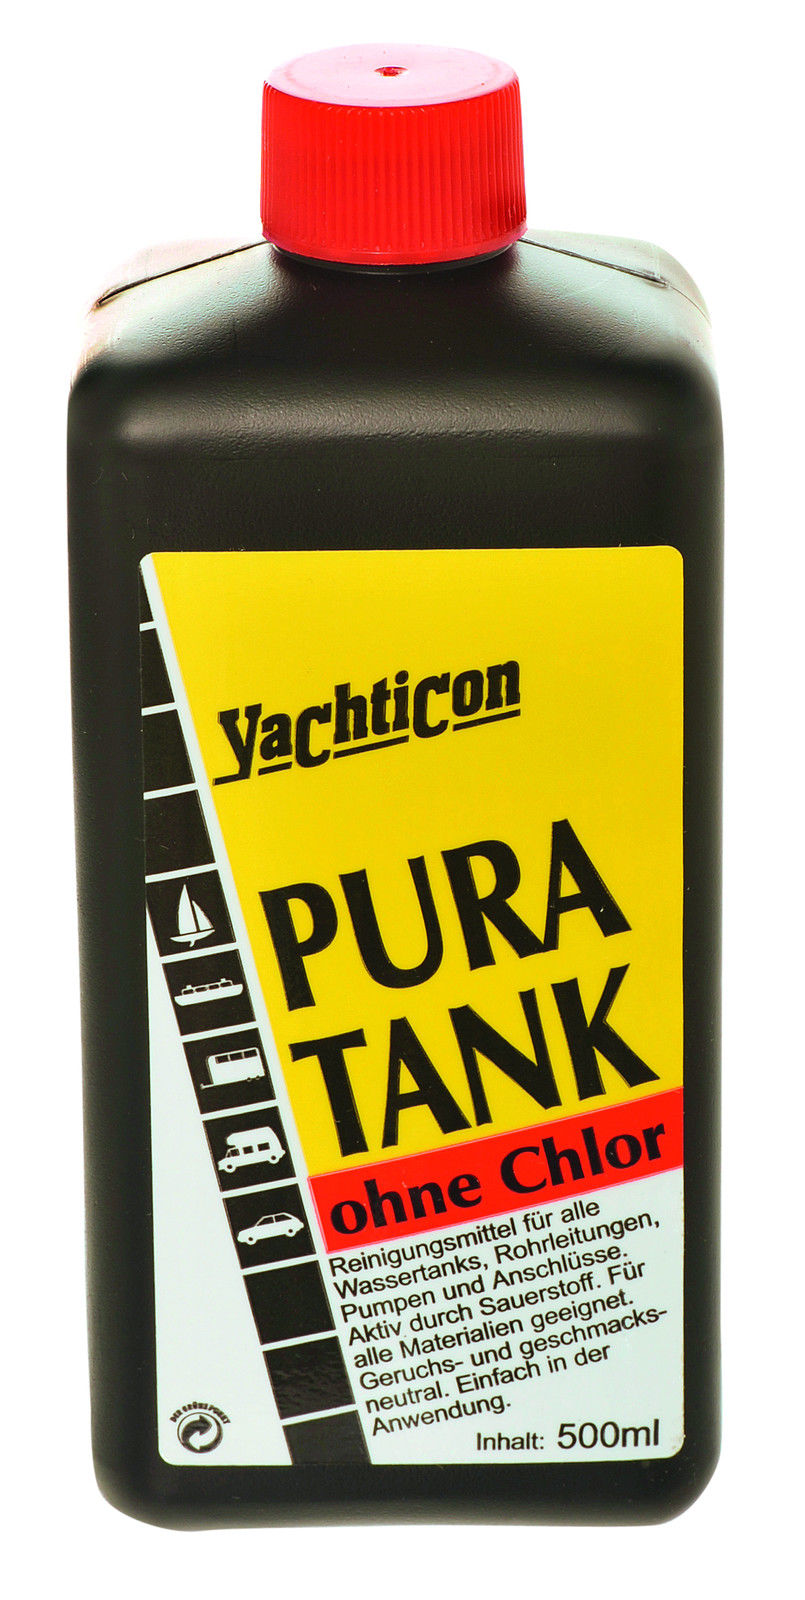 yachticon pura tank